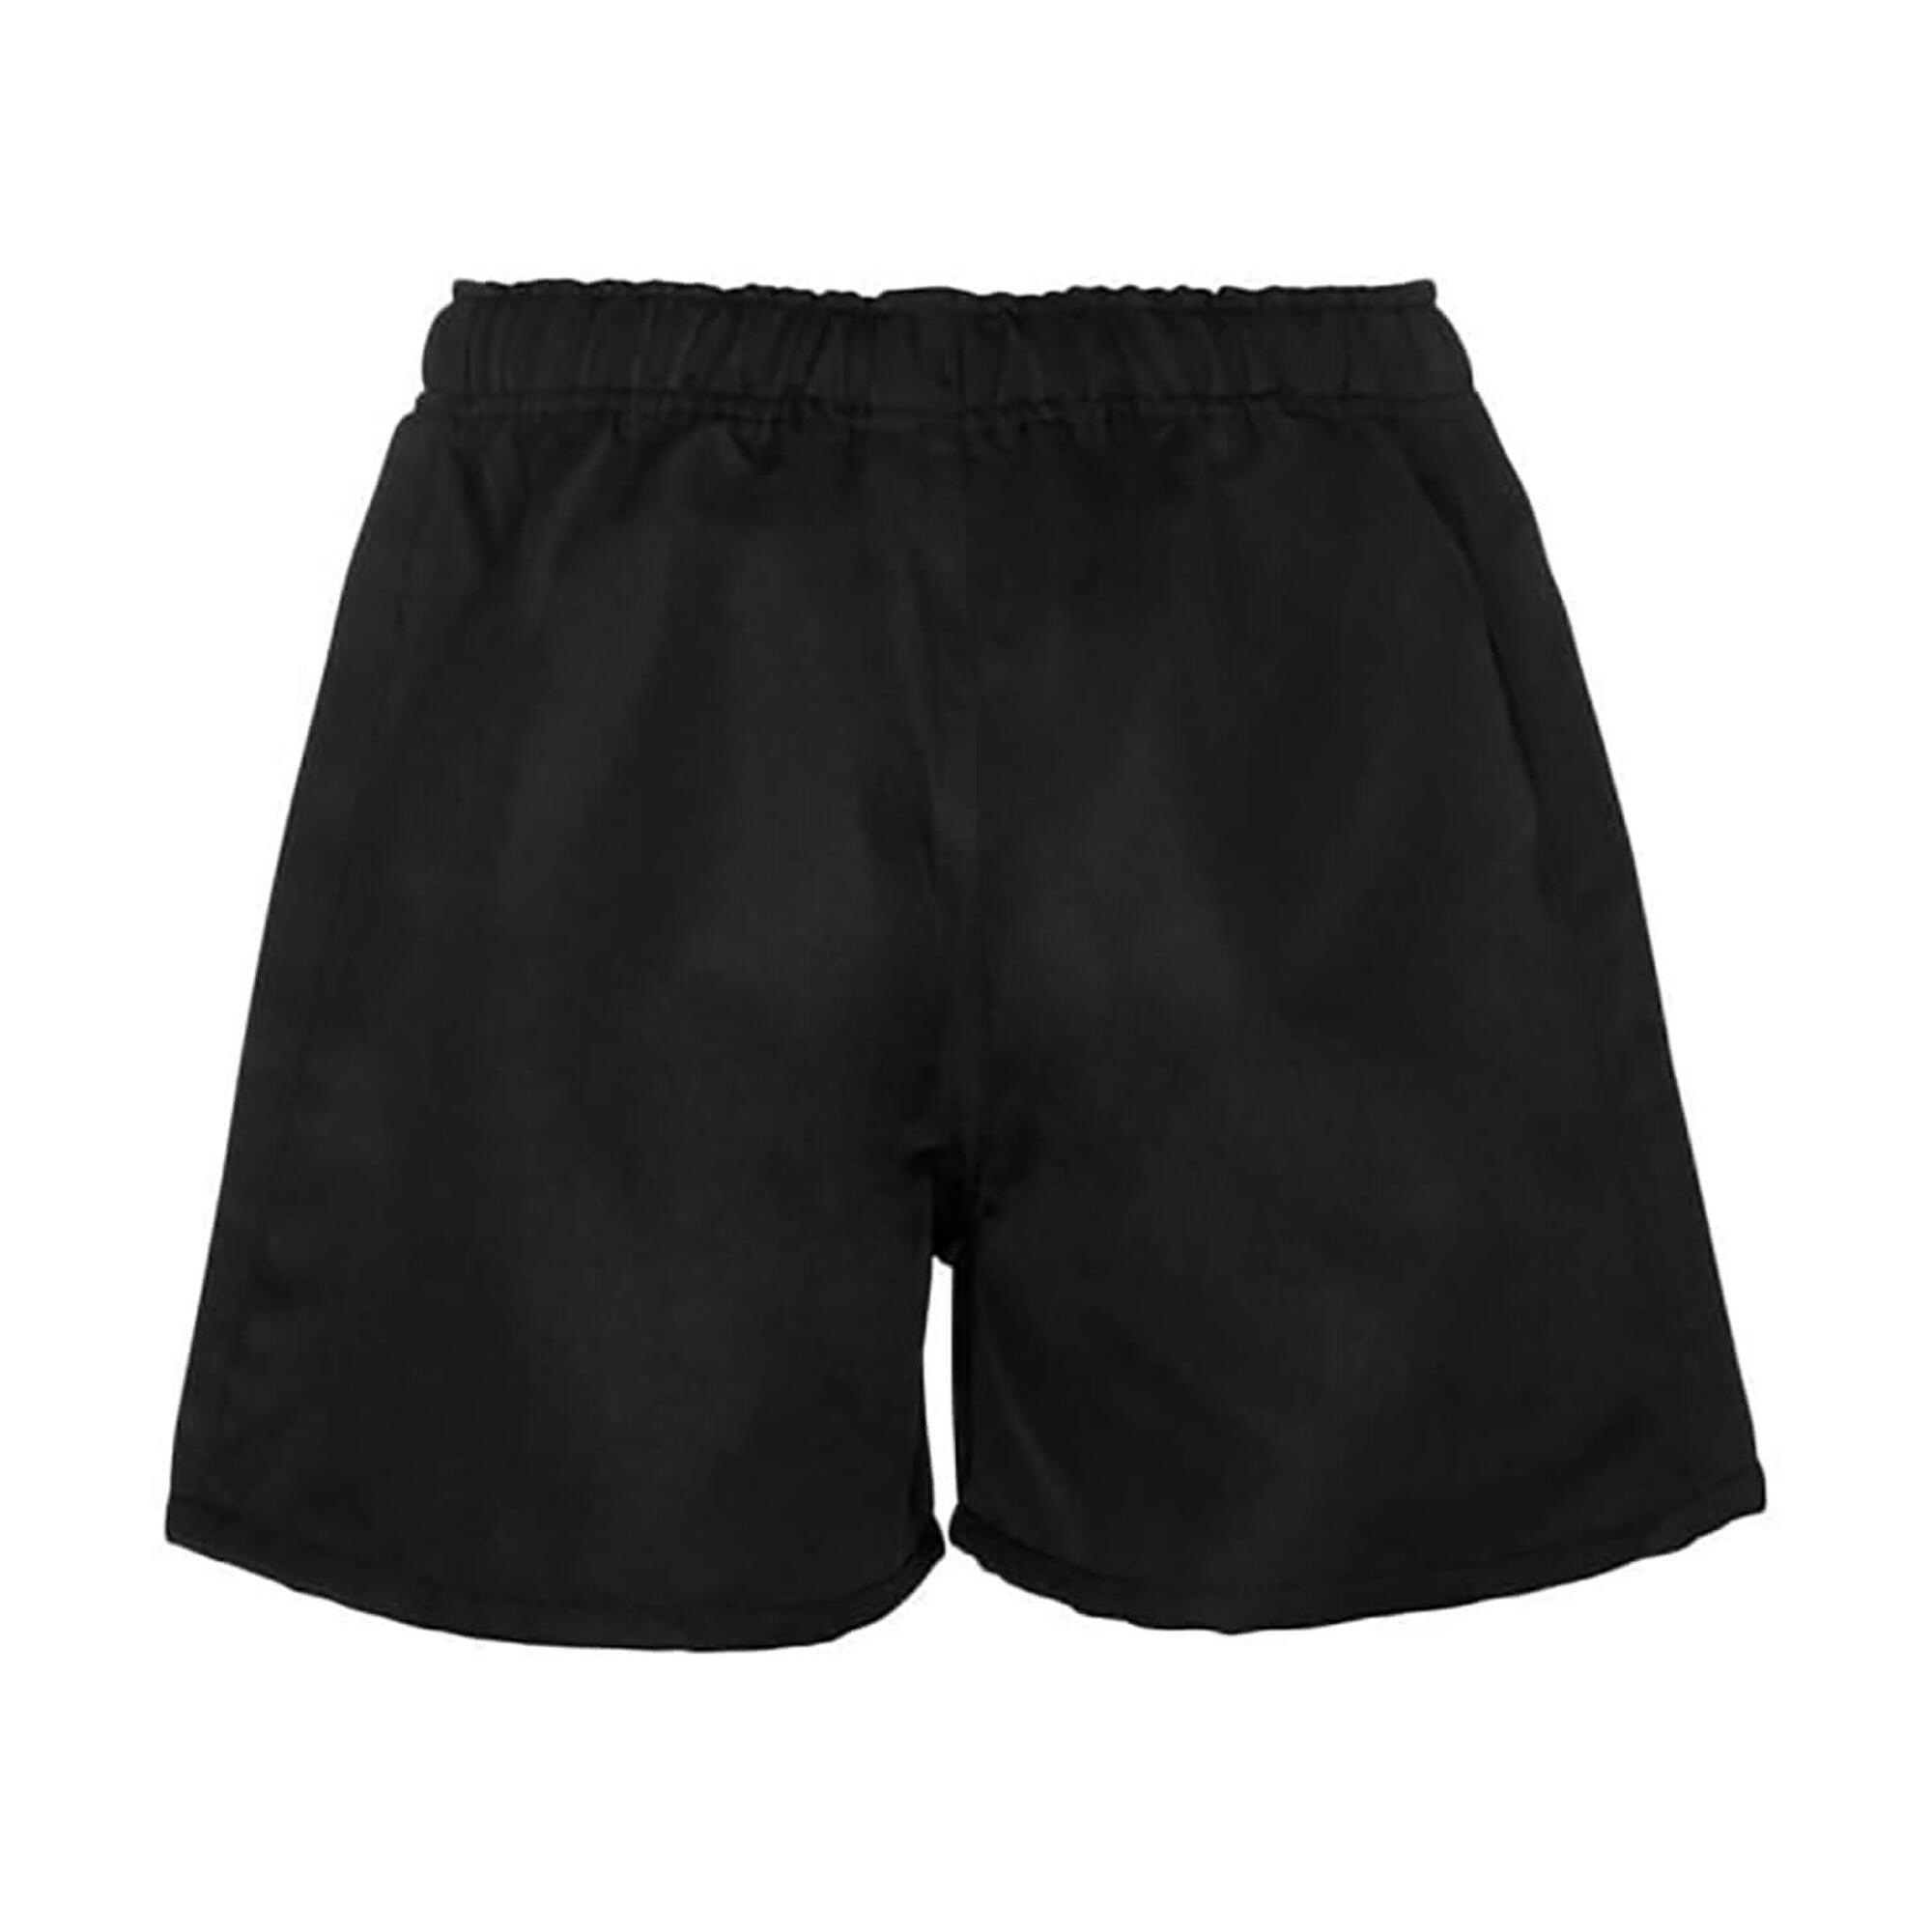 Childrens/Kids Professional Polyester Shorts (Black) 2/4